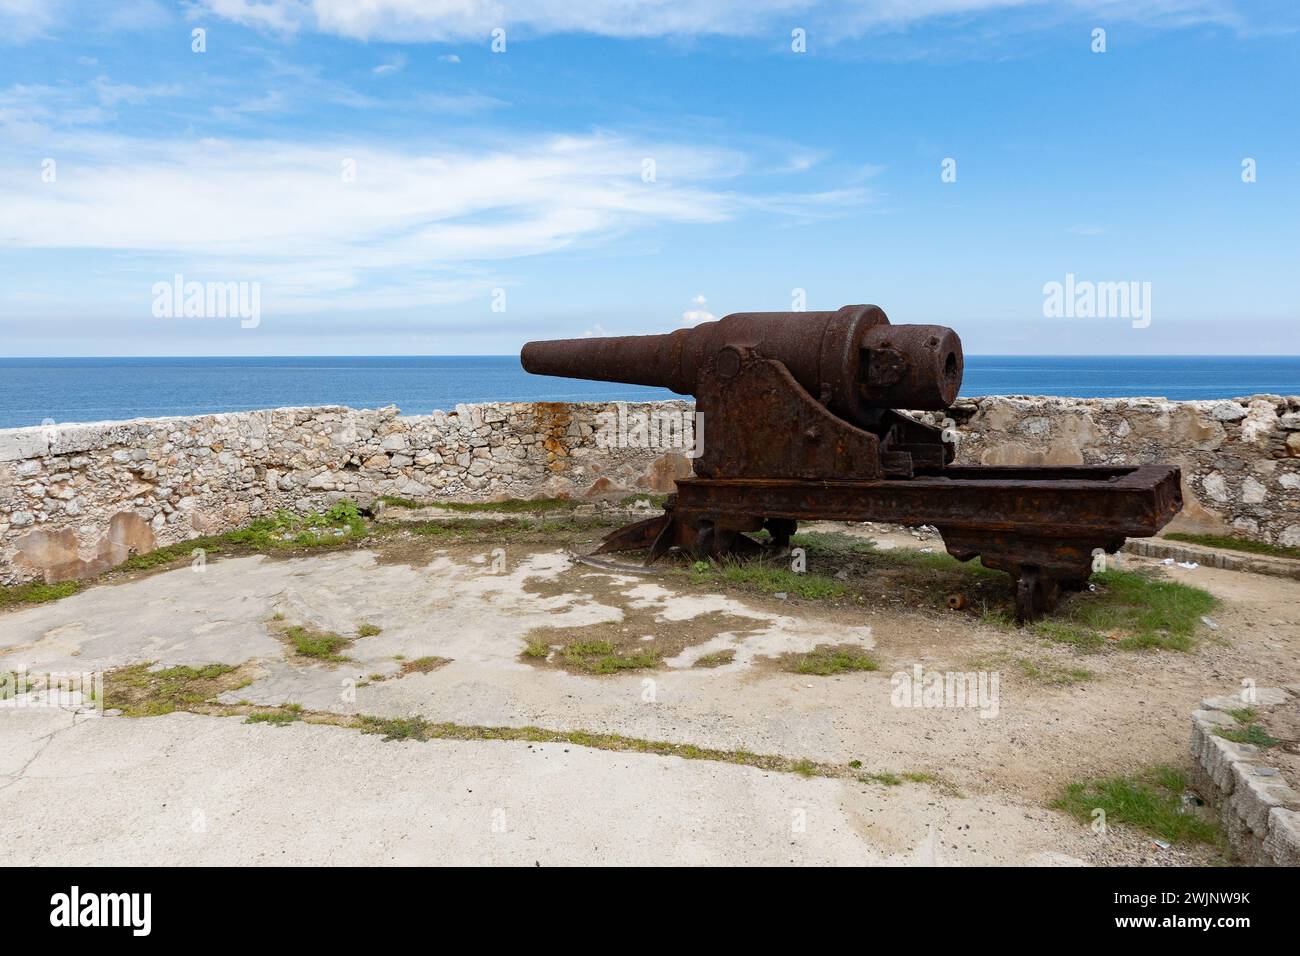 Cannon near rampart wall of Castillo de los Tres Reyes del Morro castle in Havana, Cuba Stock Photo